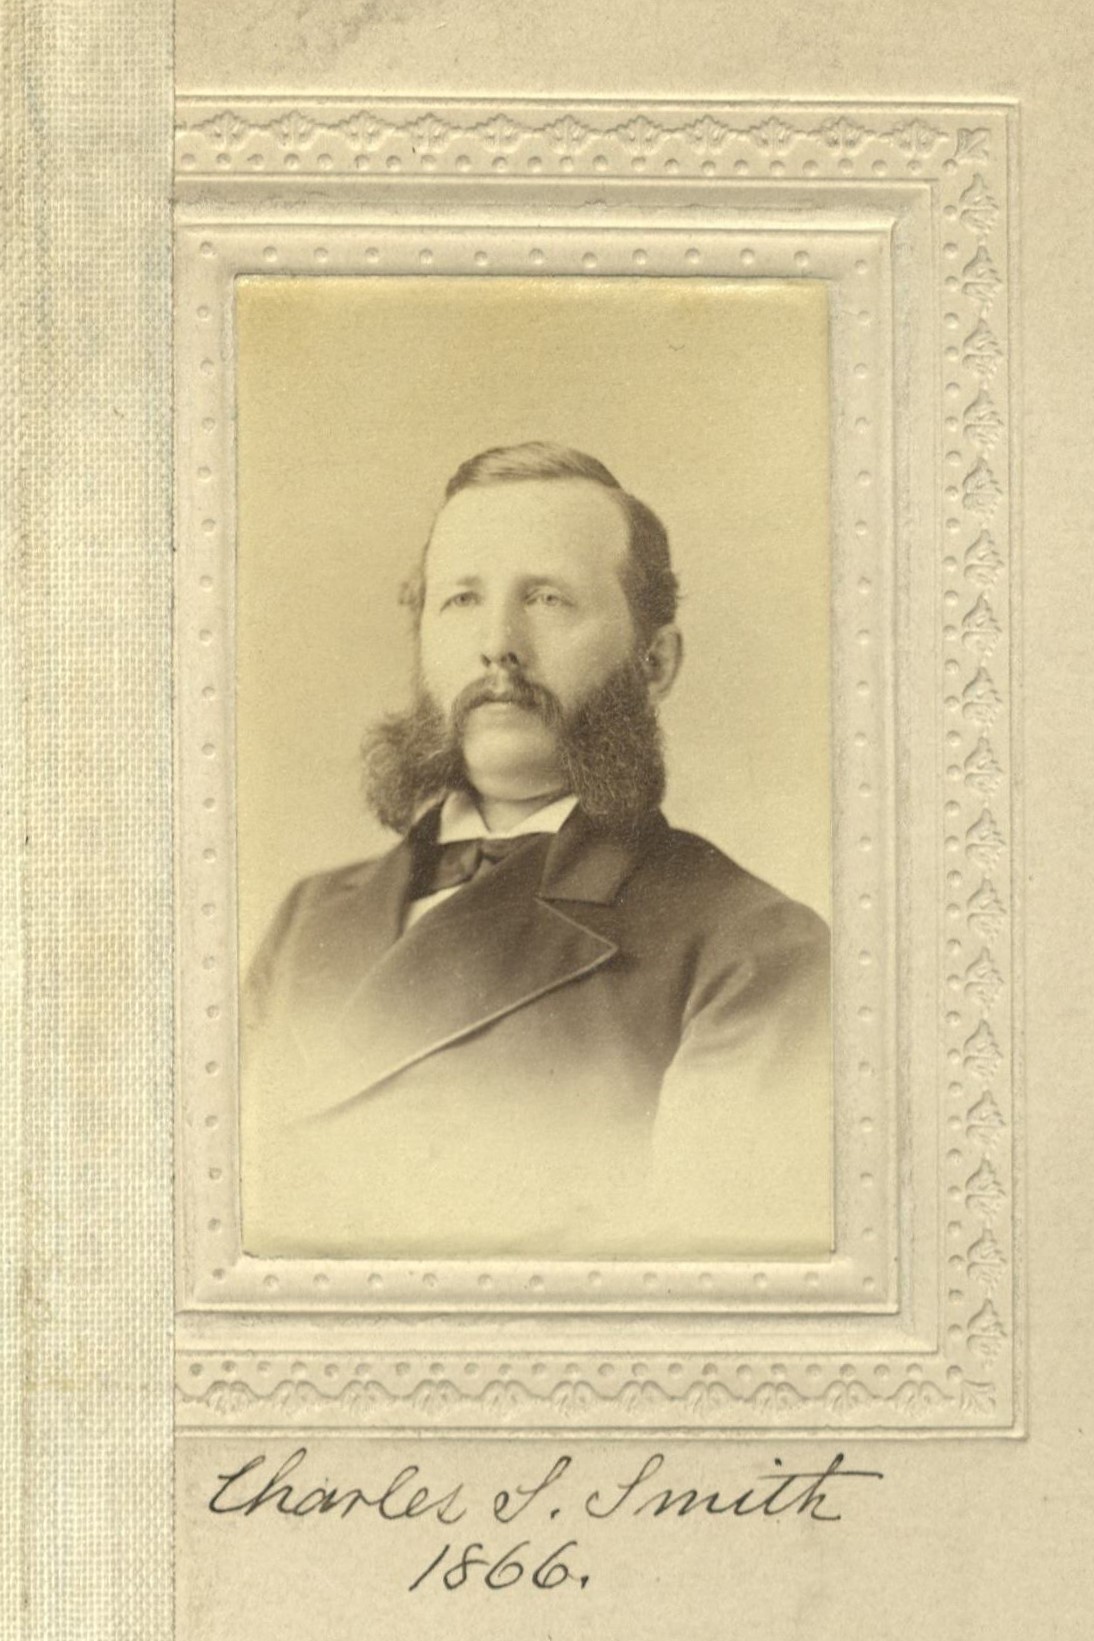 Member portrait of Charles Stewart Smith